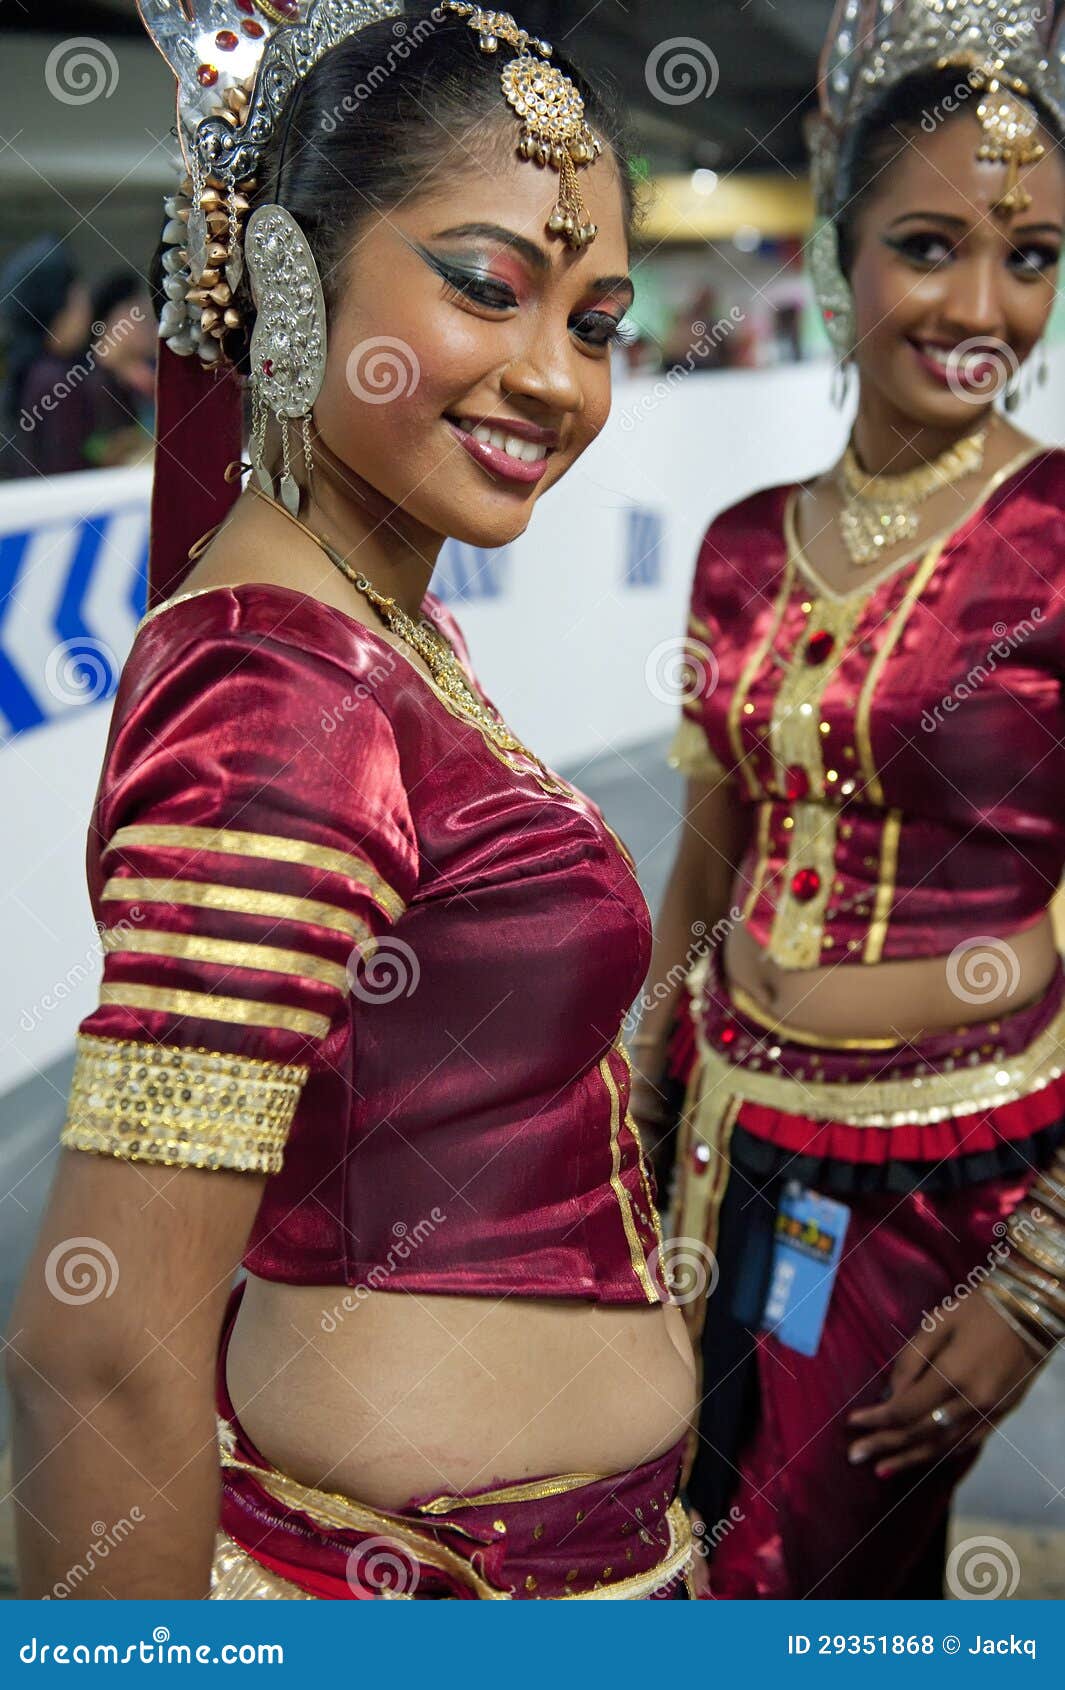 Sri lanka girls